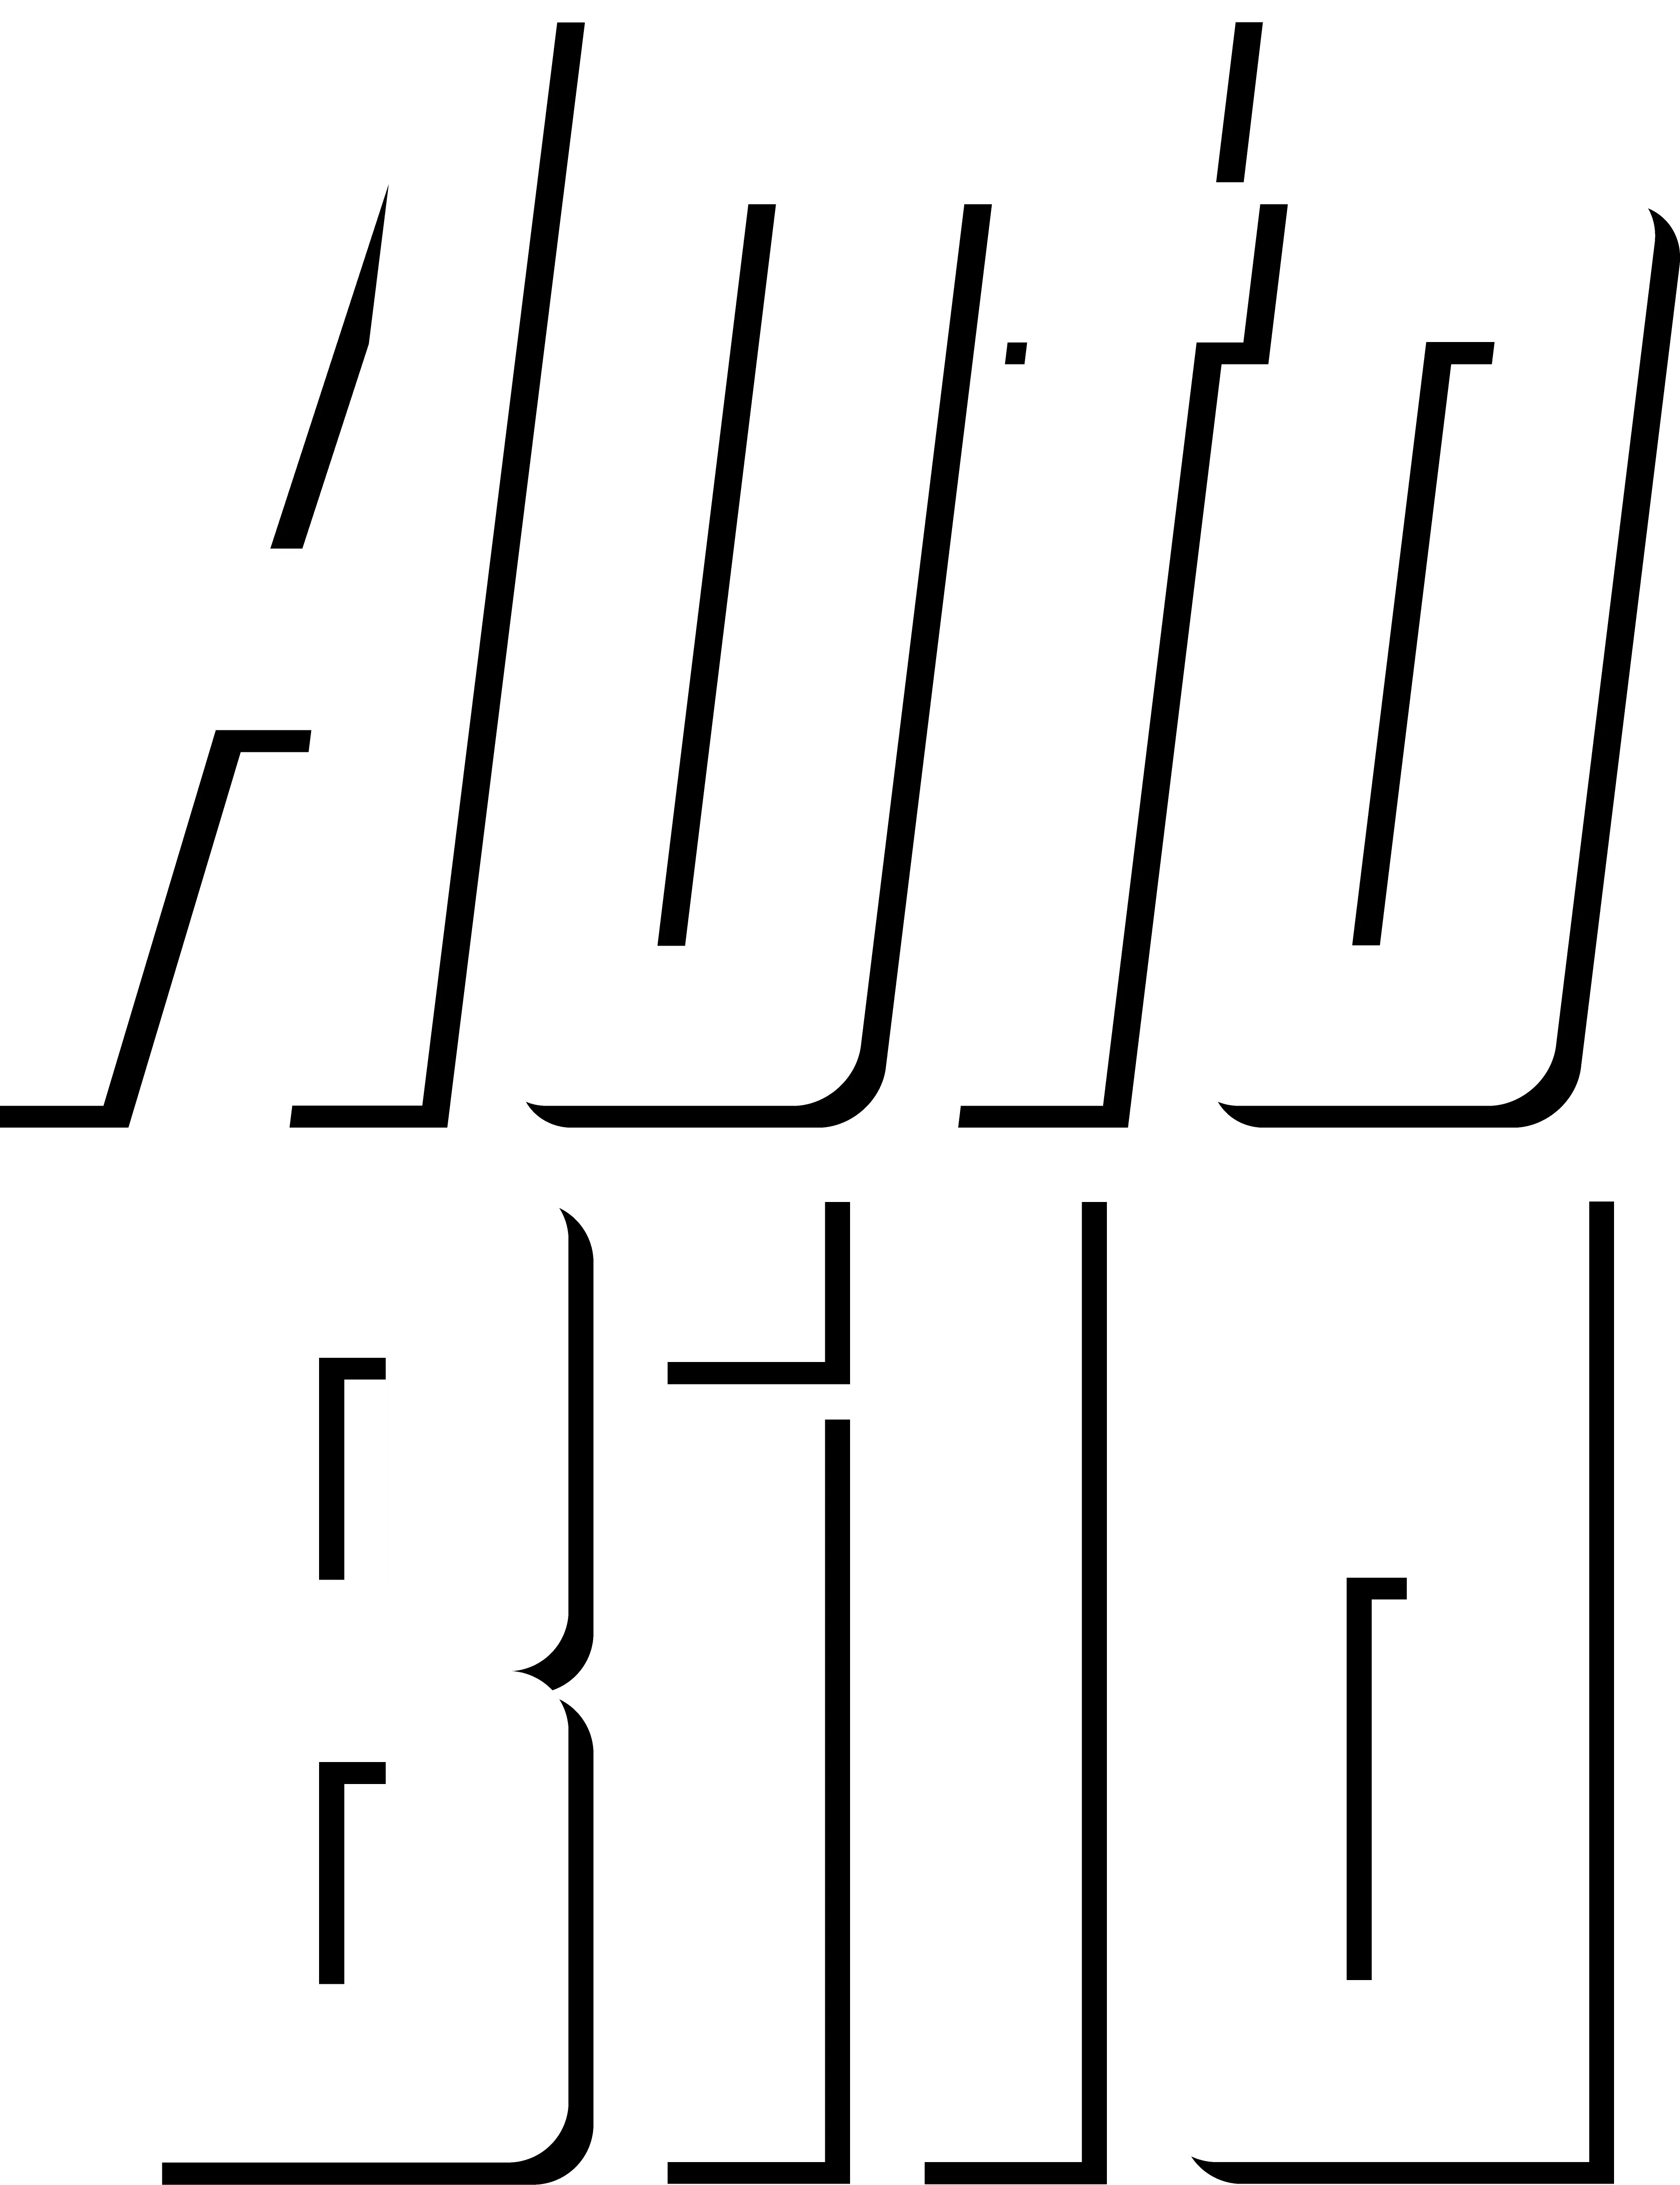 Auto Bild Logo